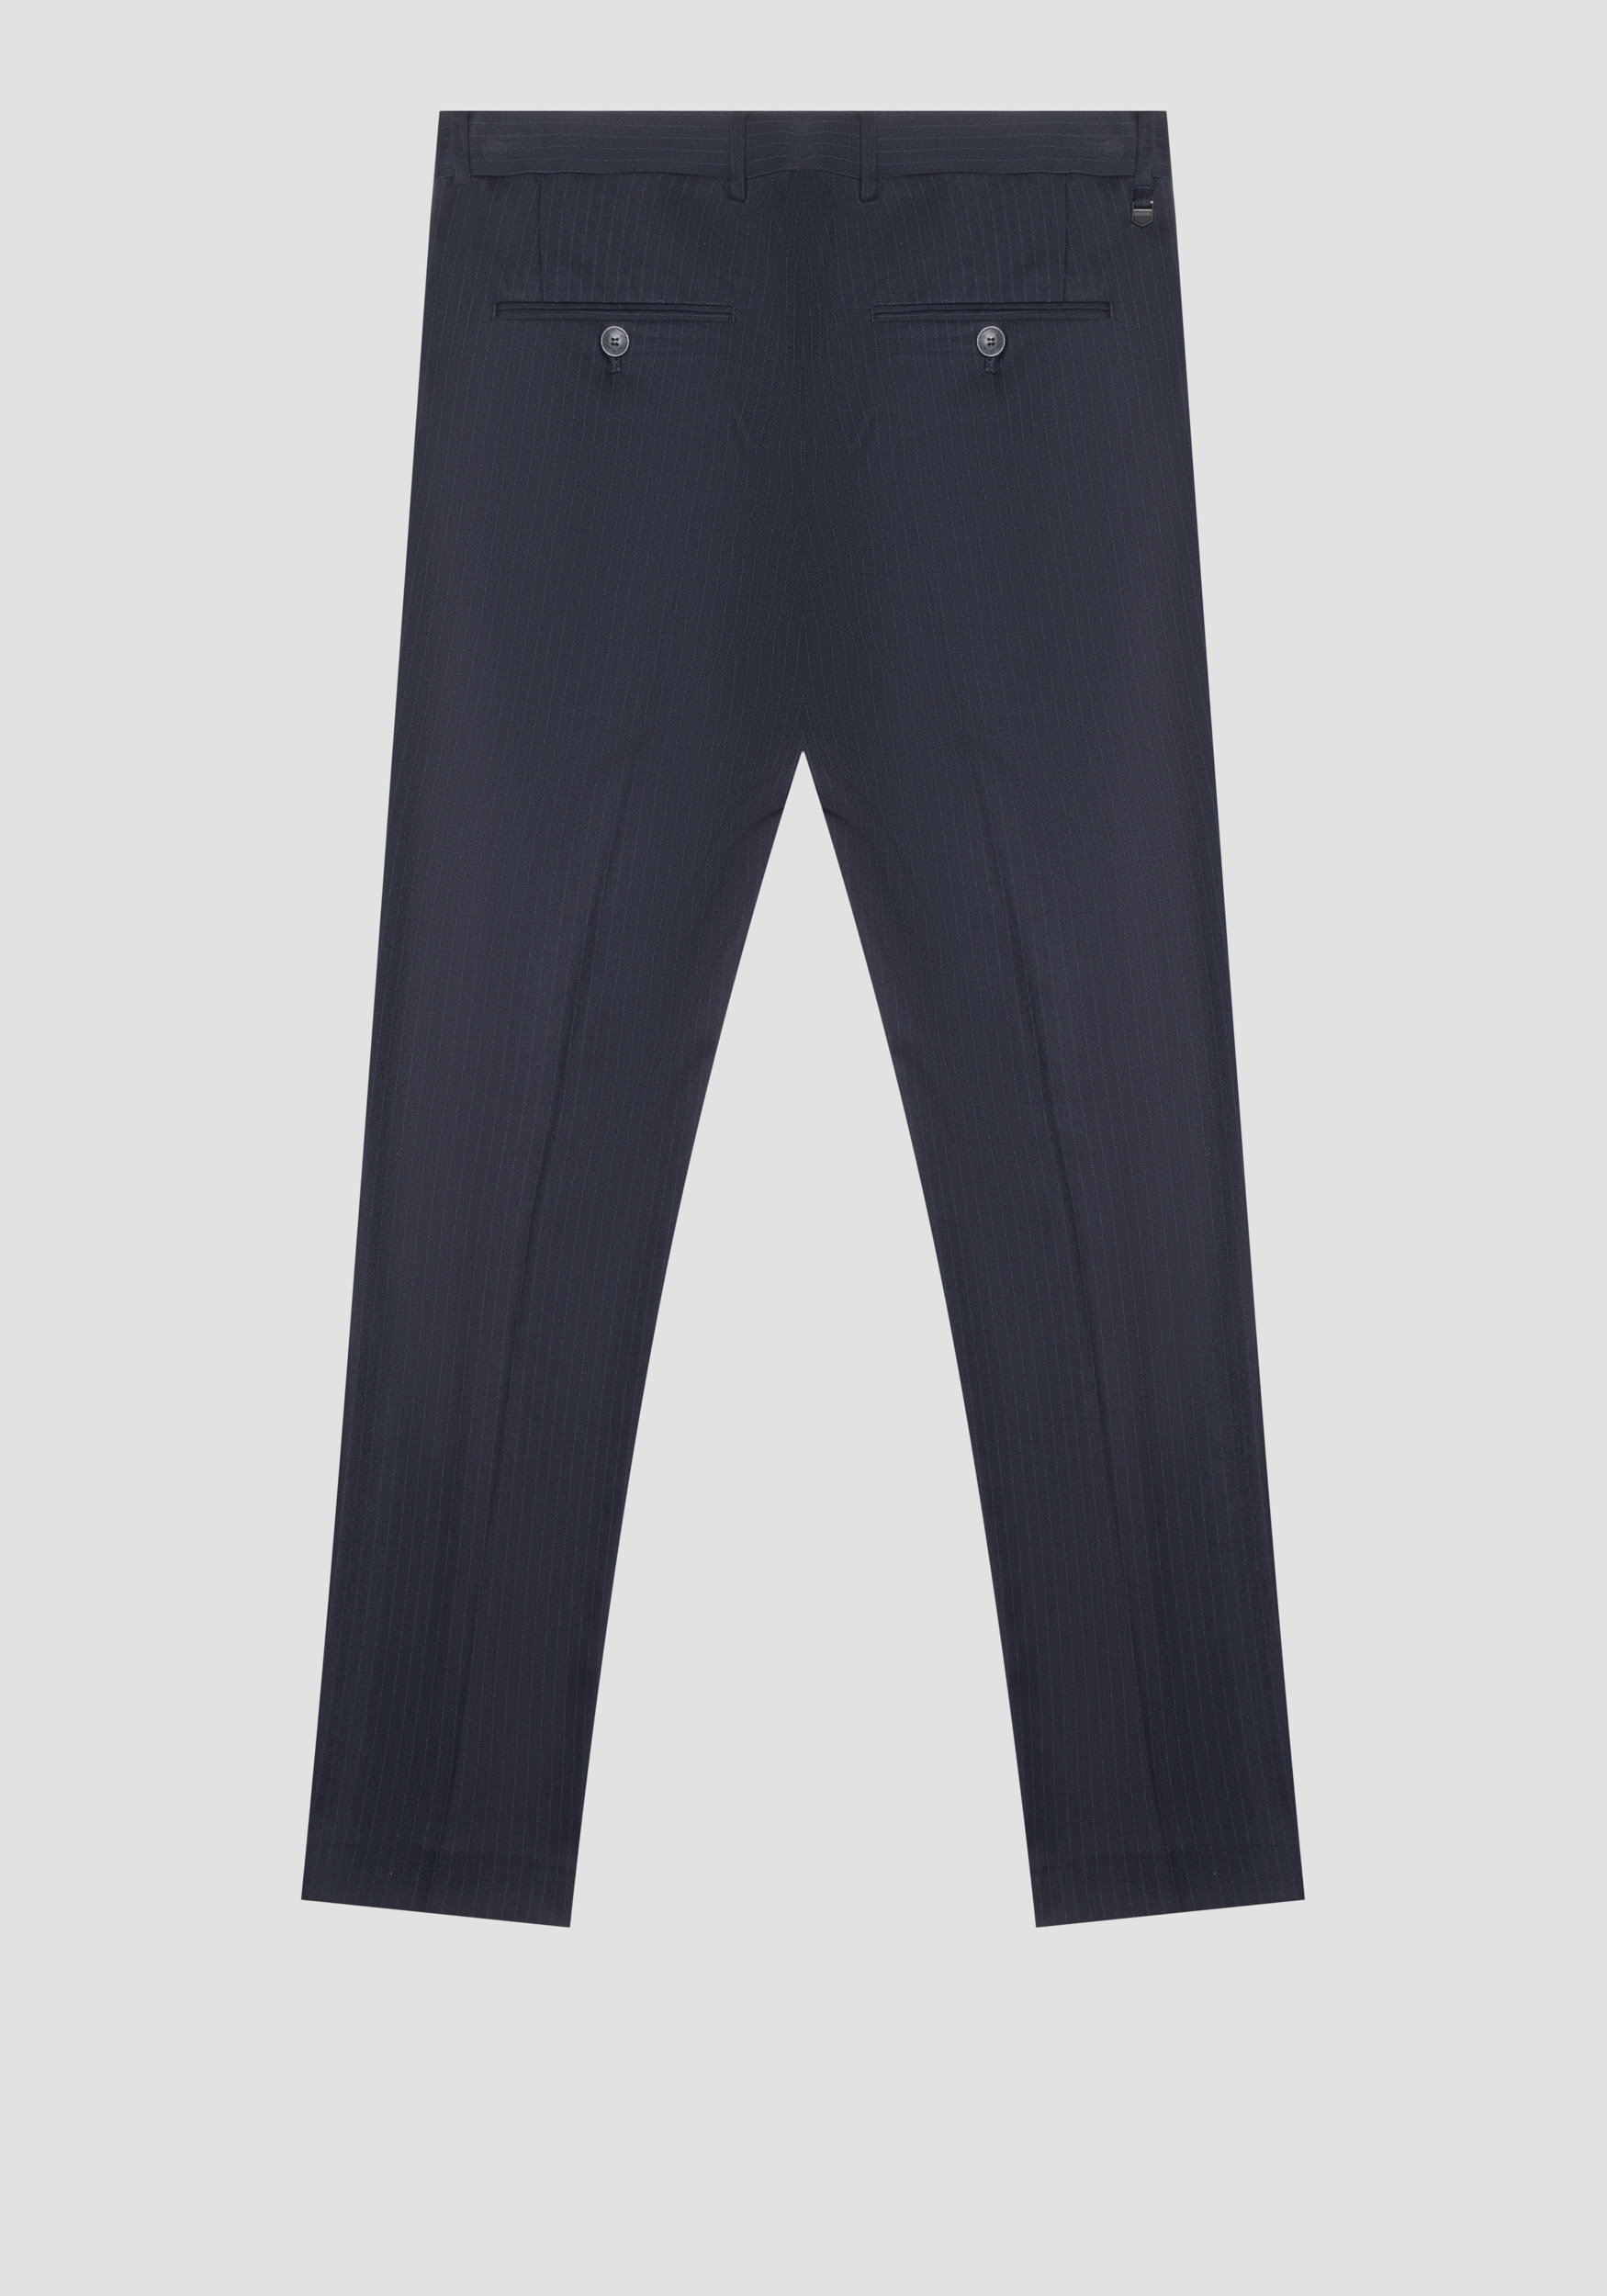 Antony Morato Pantalon Slim Fit Bonnie En Tissu De Viscose Melangee Avec Motif Raye Encre Bleu | Homme Pantalons